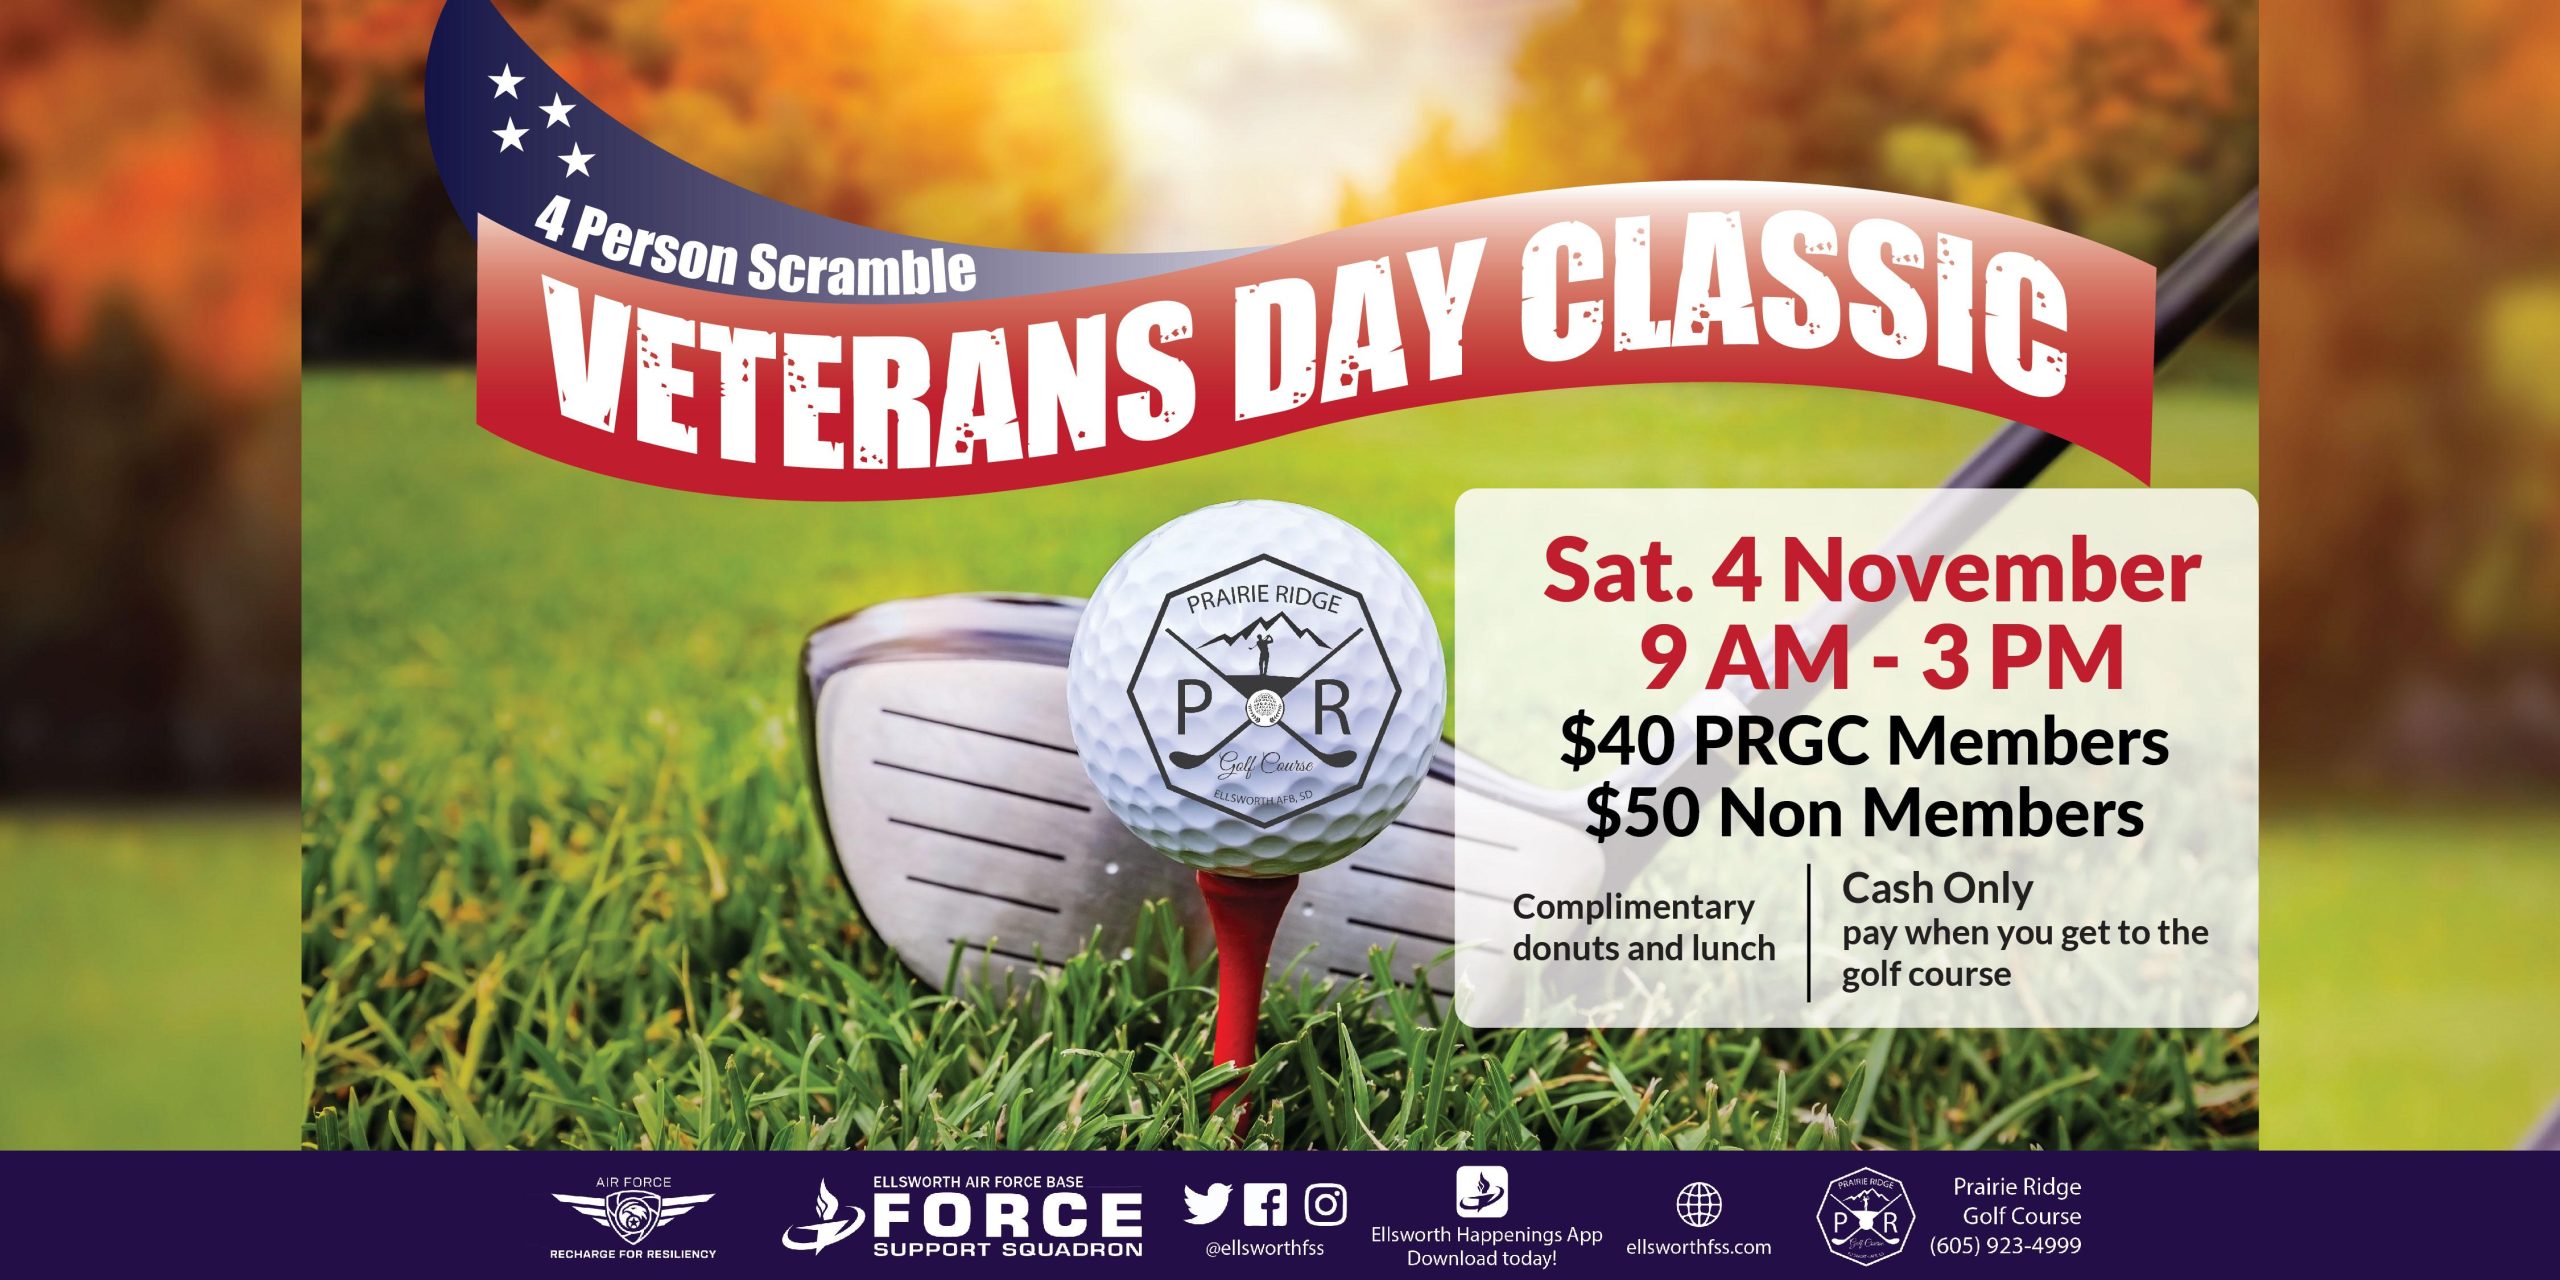 PRGC Veterans Day Classic - 4 person scramble